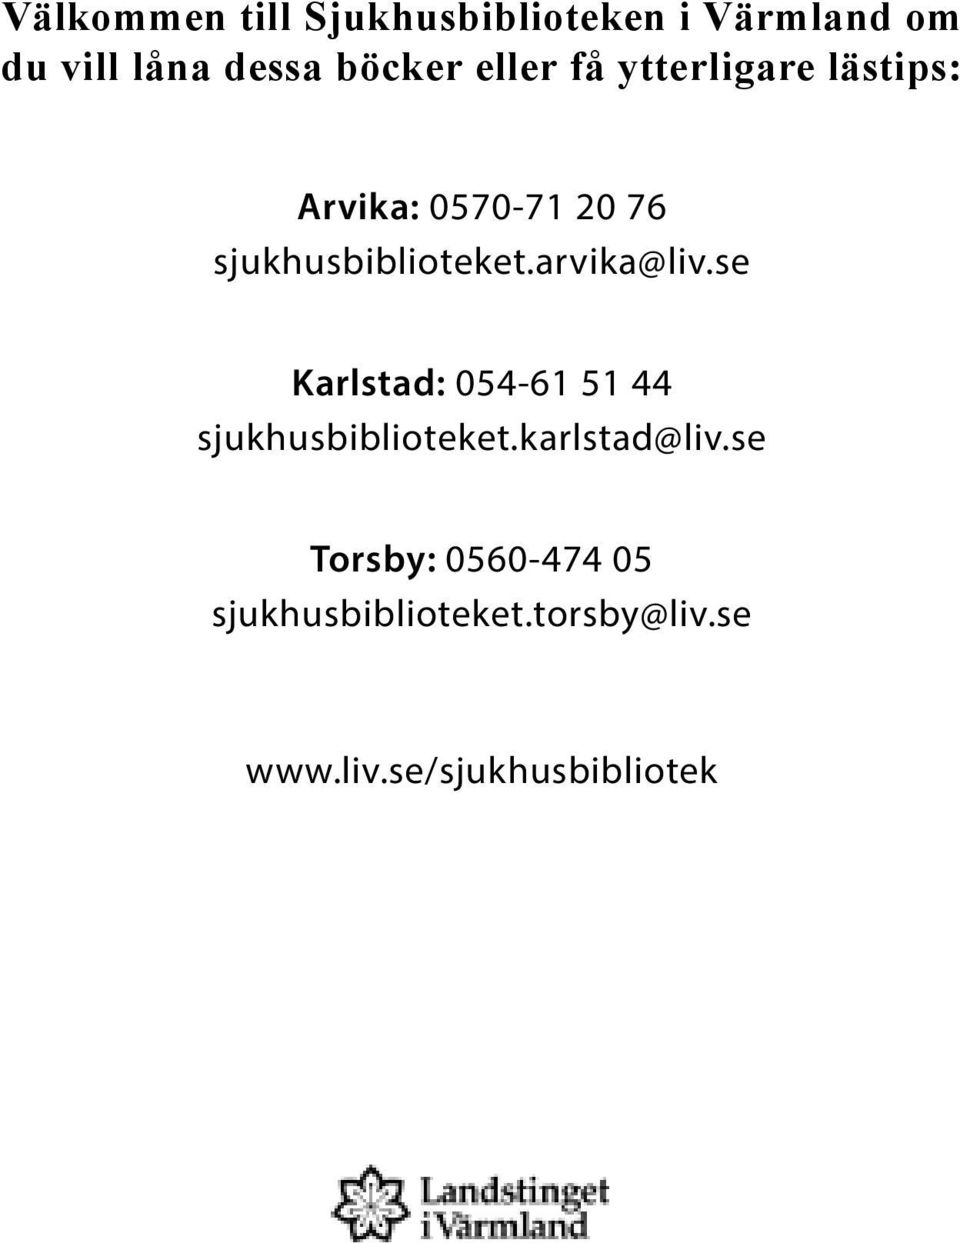 arvika@liv.se Karlstad: 054-61 51 44 sjukhusbiblioteket.karlstad@liv.